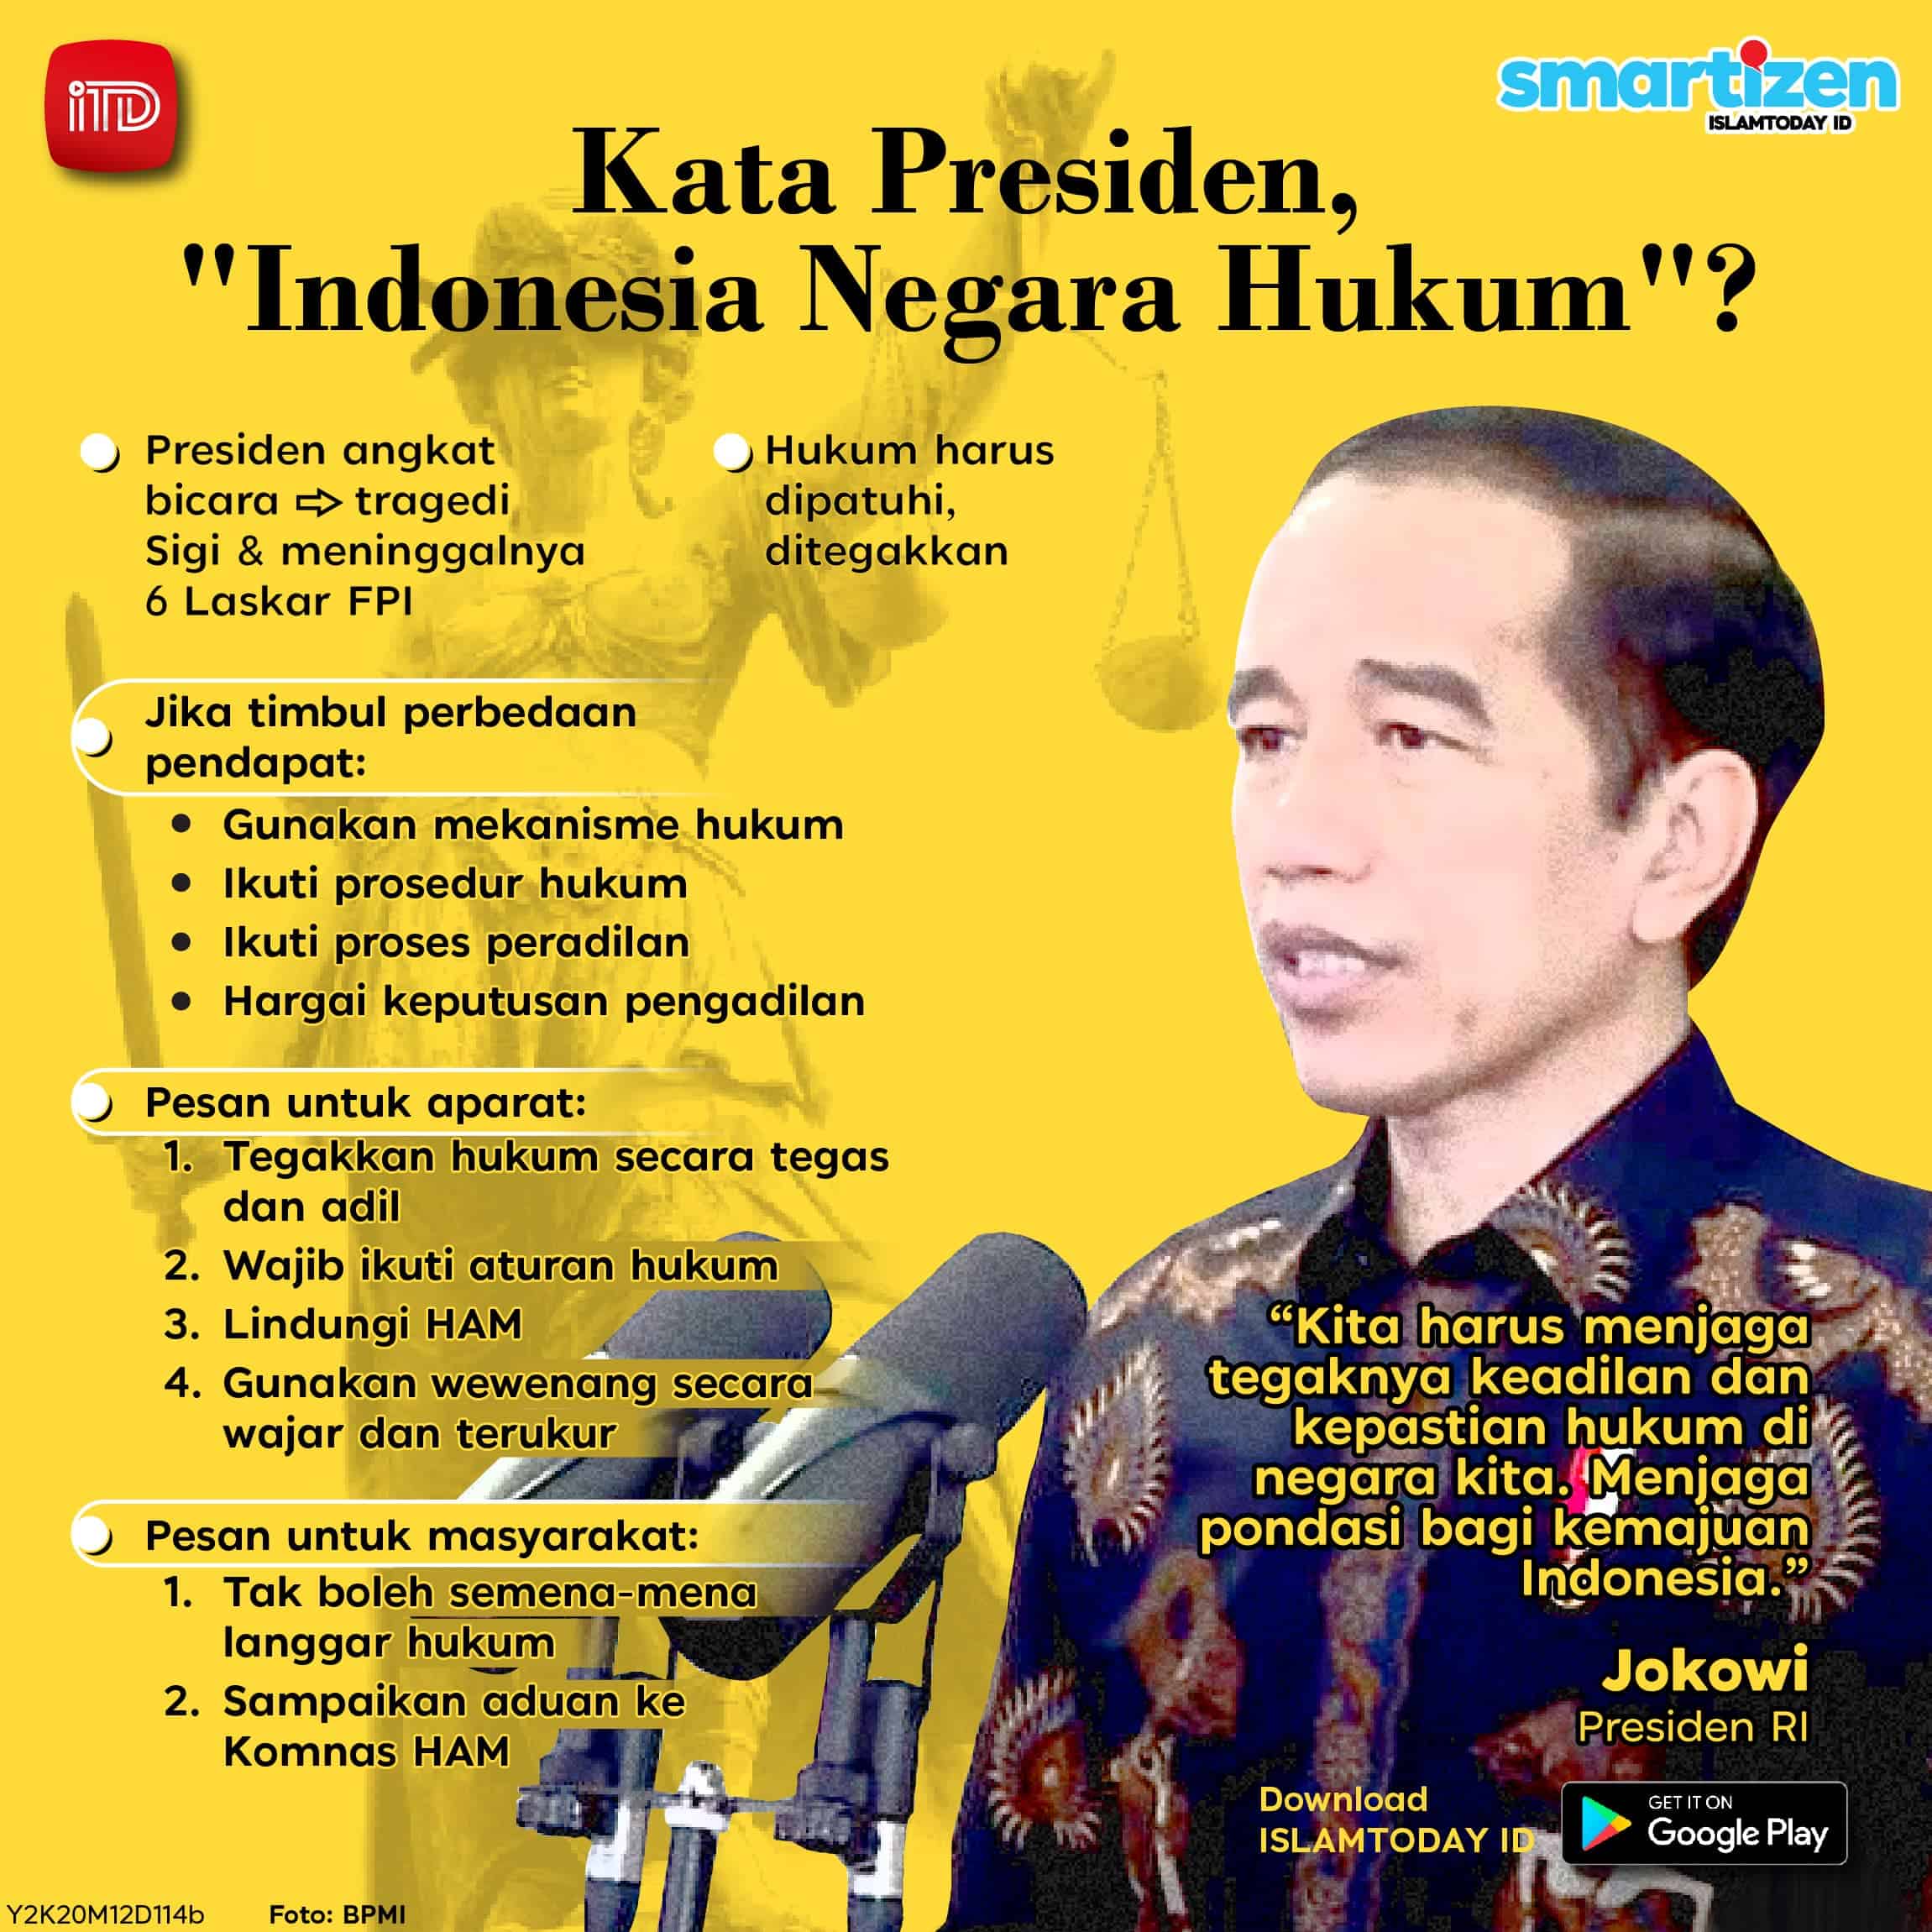 Kata Presiden, "Indonesia Negara Hukum" ? - IslamToday